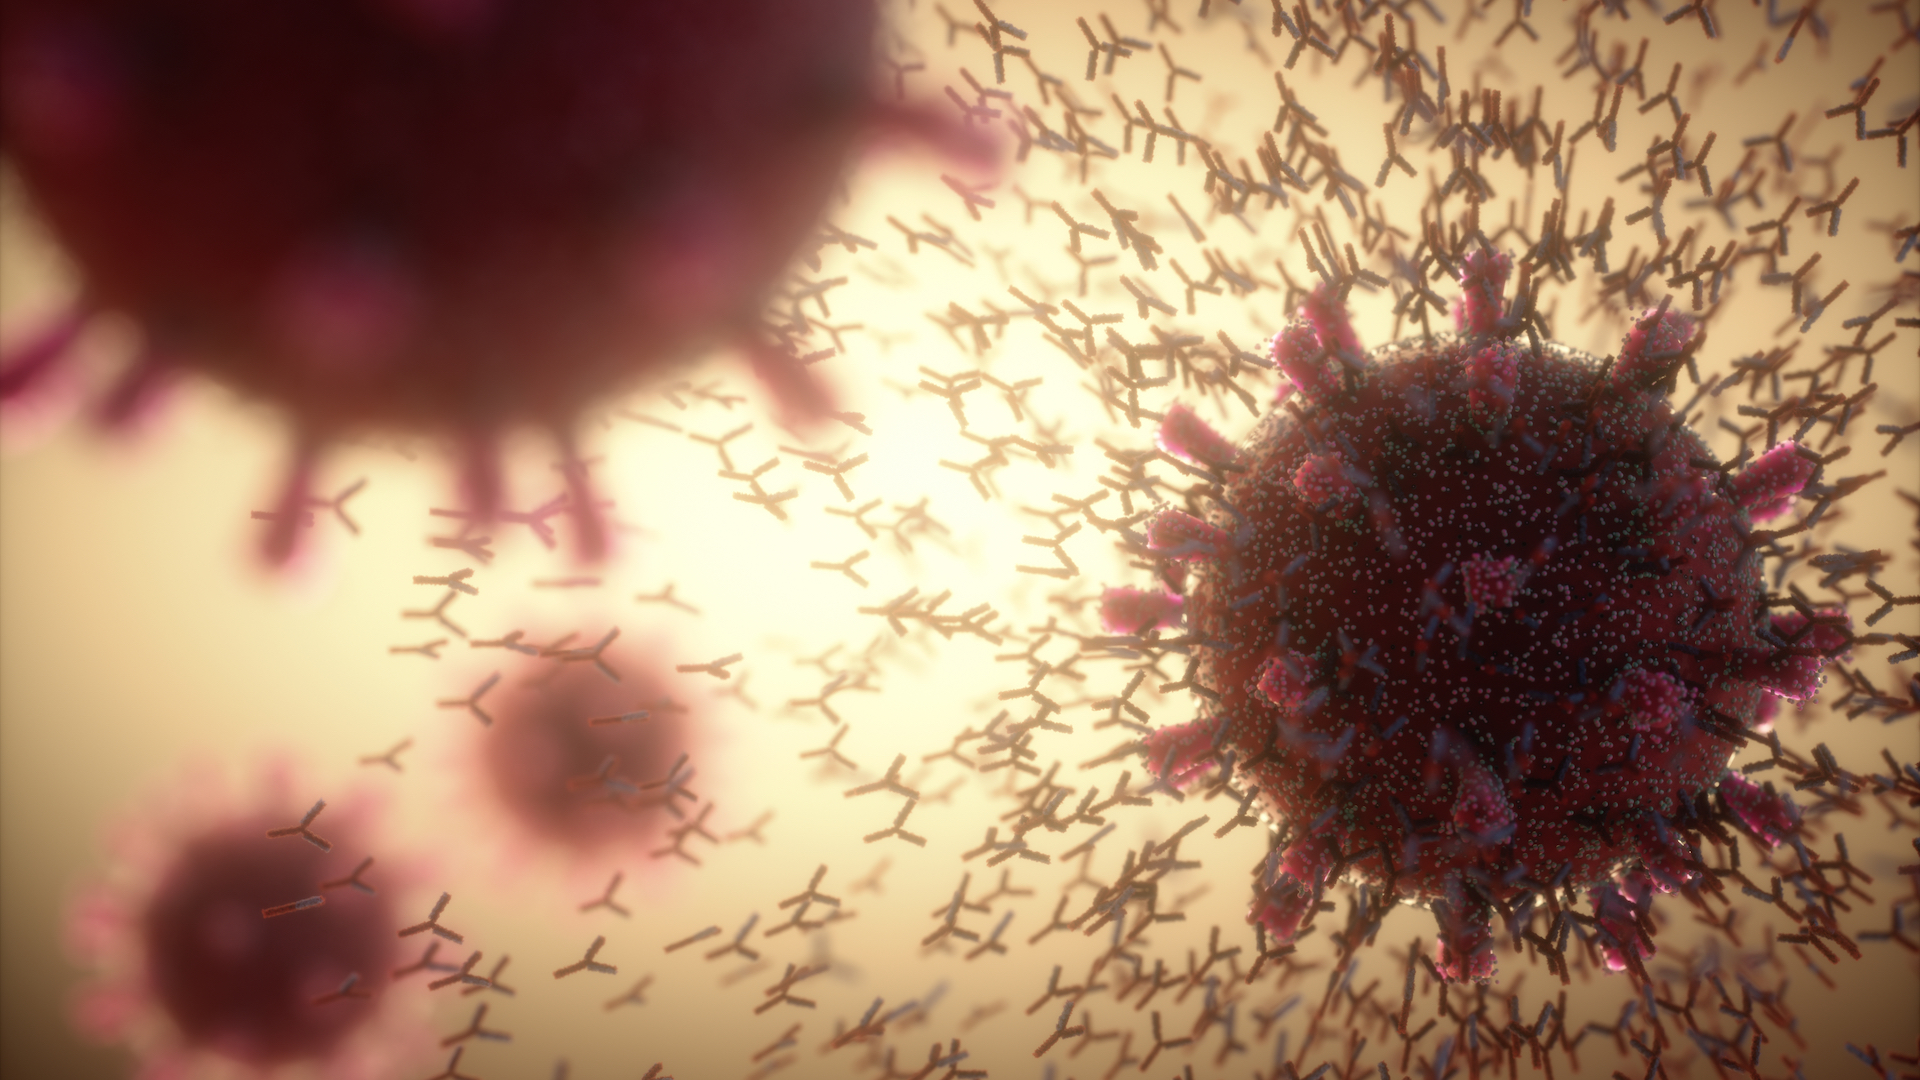 A rendering of Y-shaped antibodies attacking RNA virus molecules